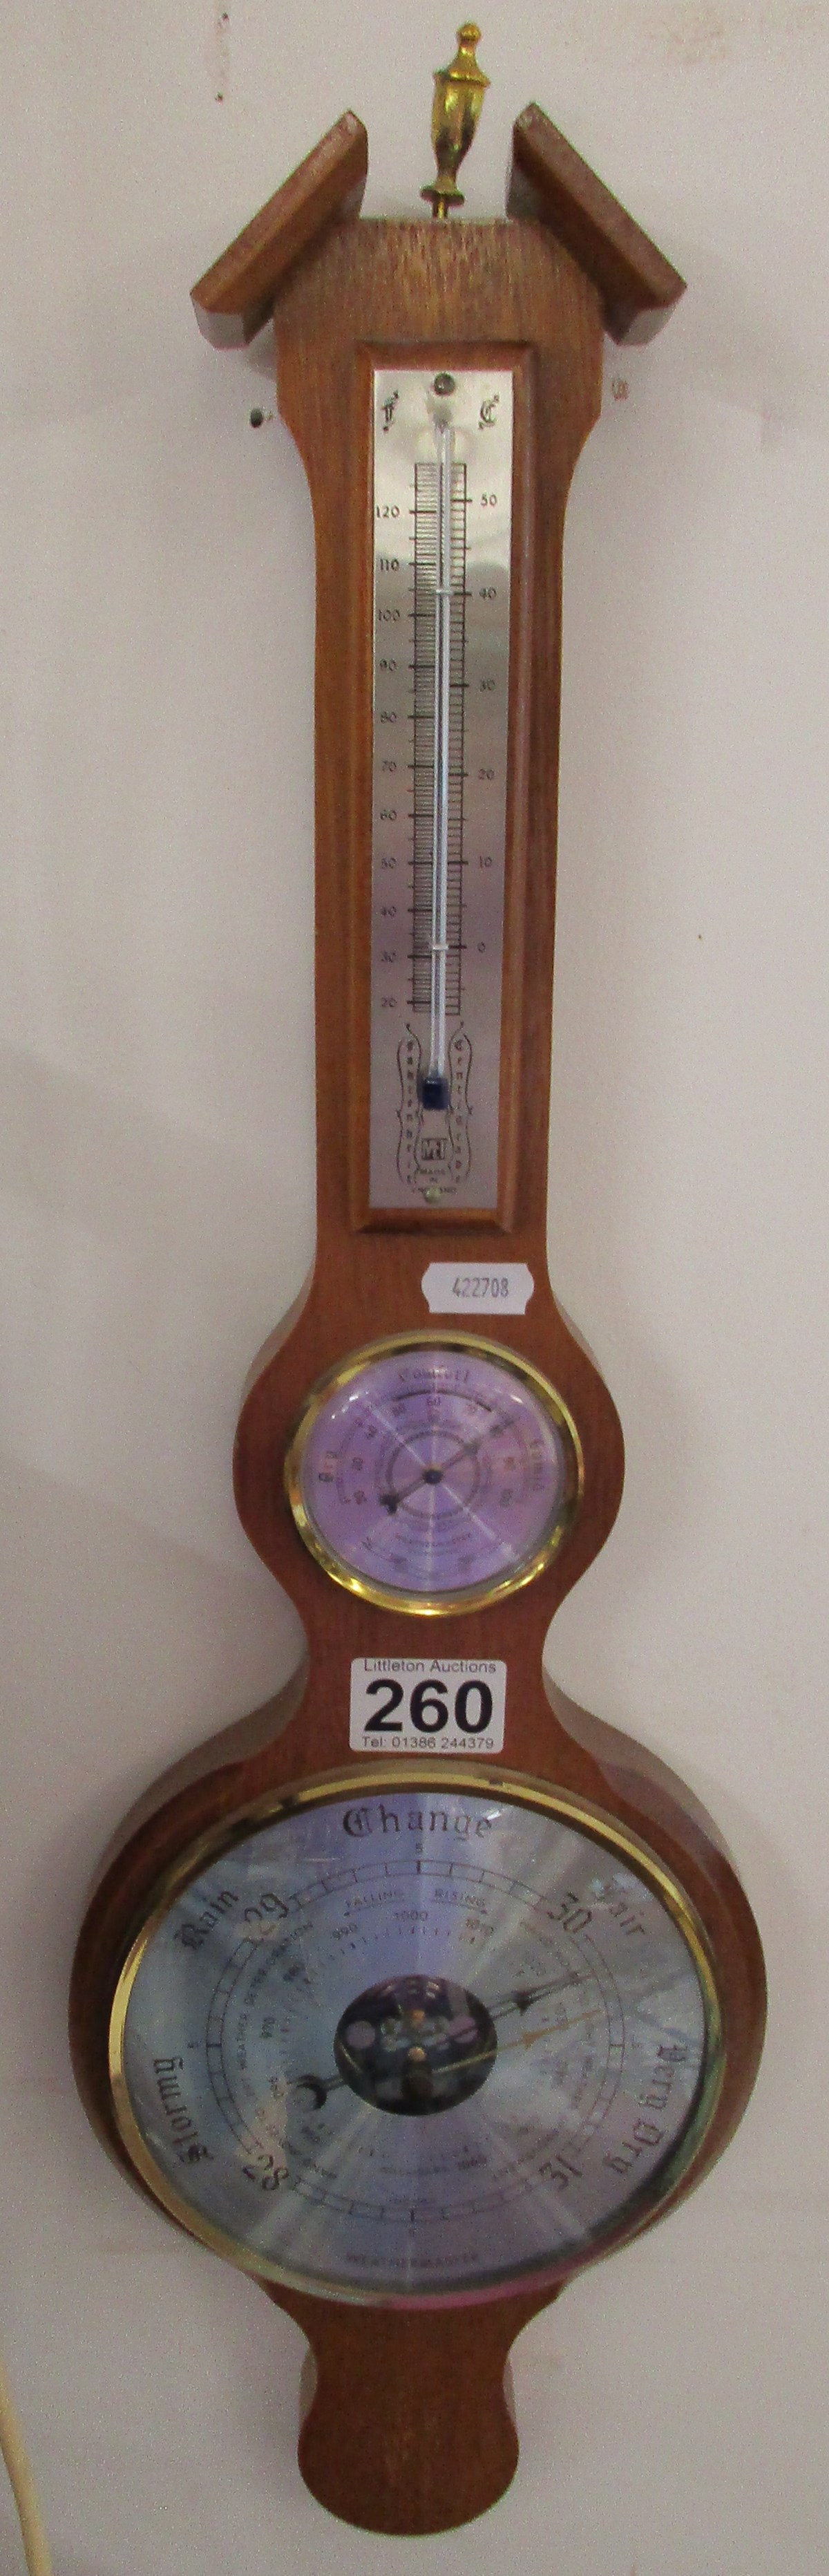 Small barometer